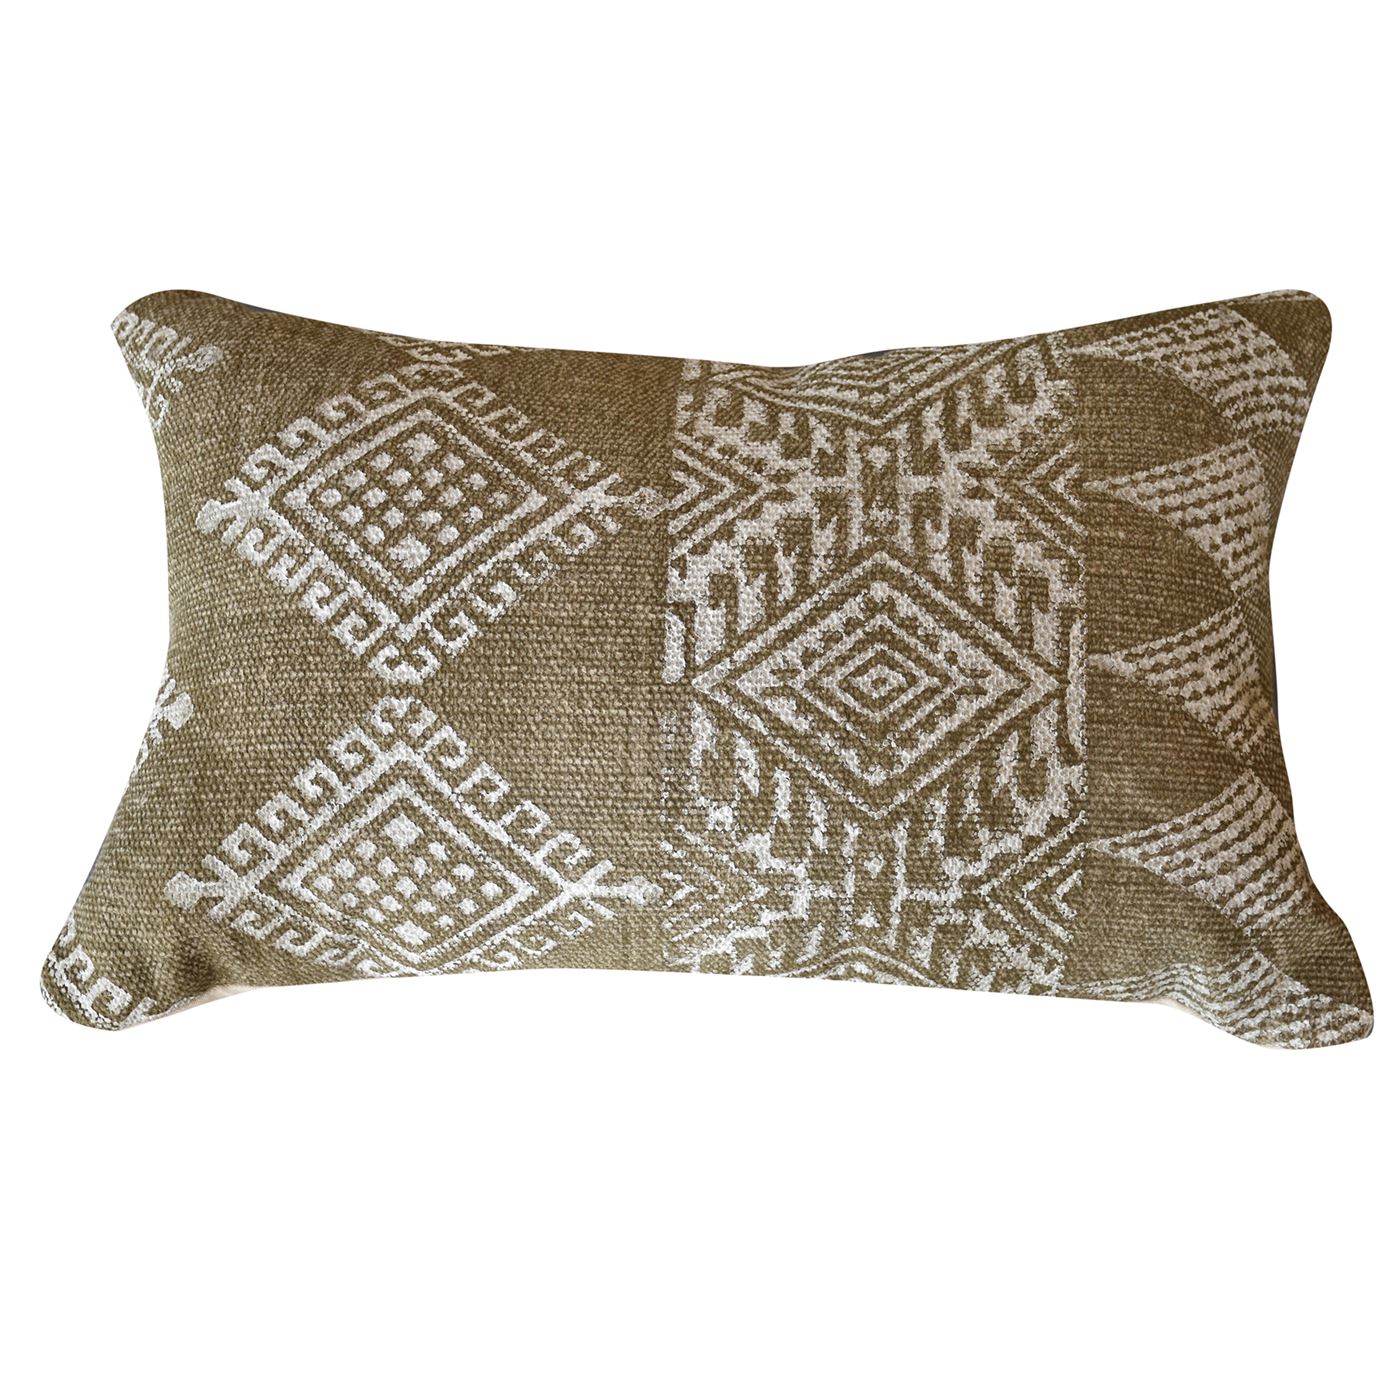 Leura Pillow, Cotton, Printed, Olive, Pitloom, Flat Weave